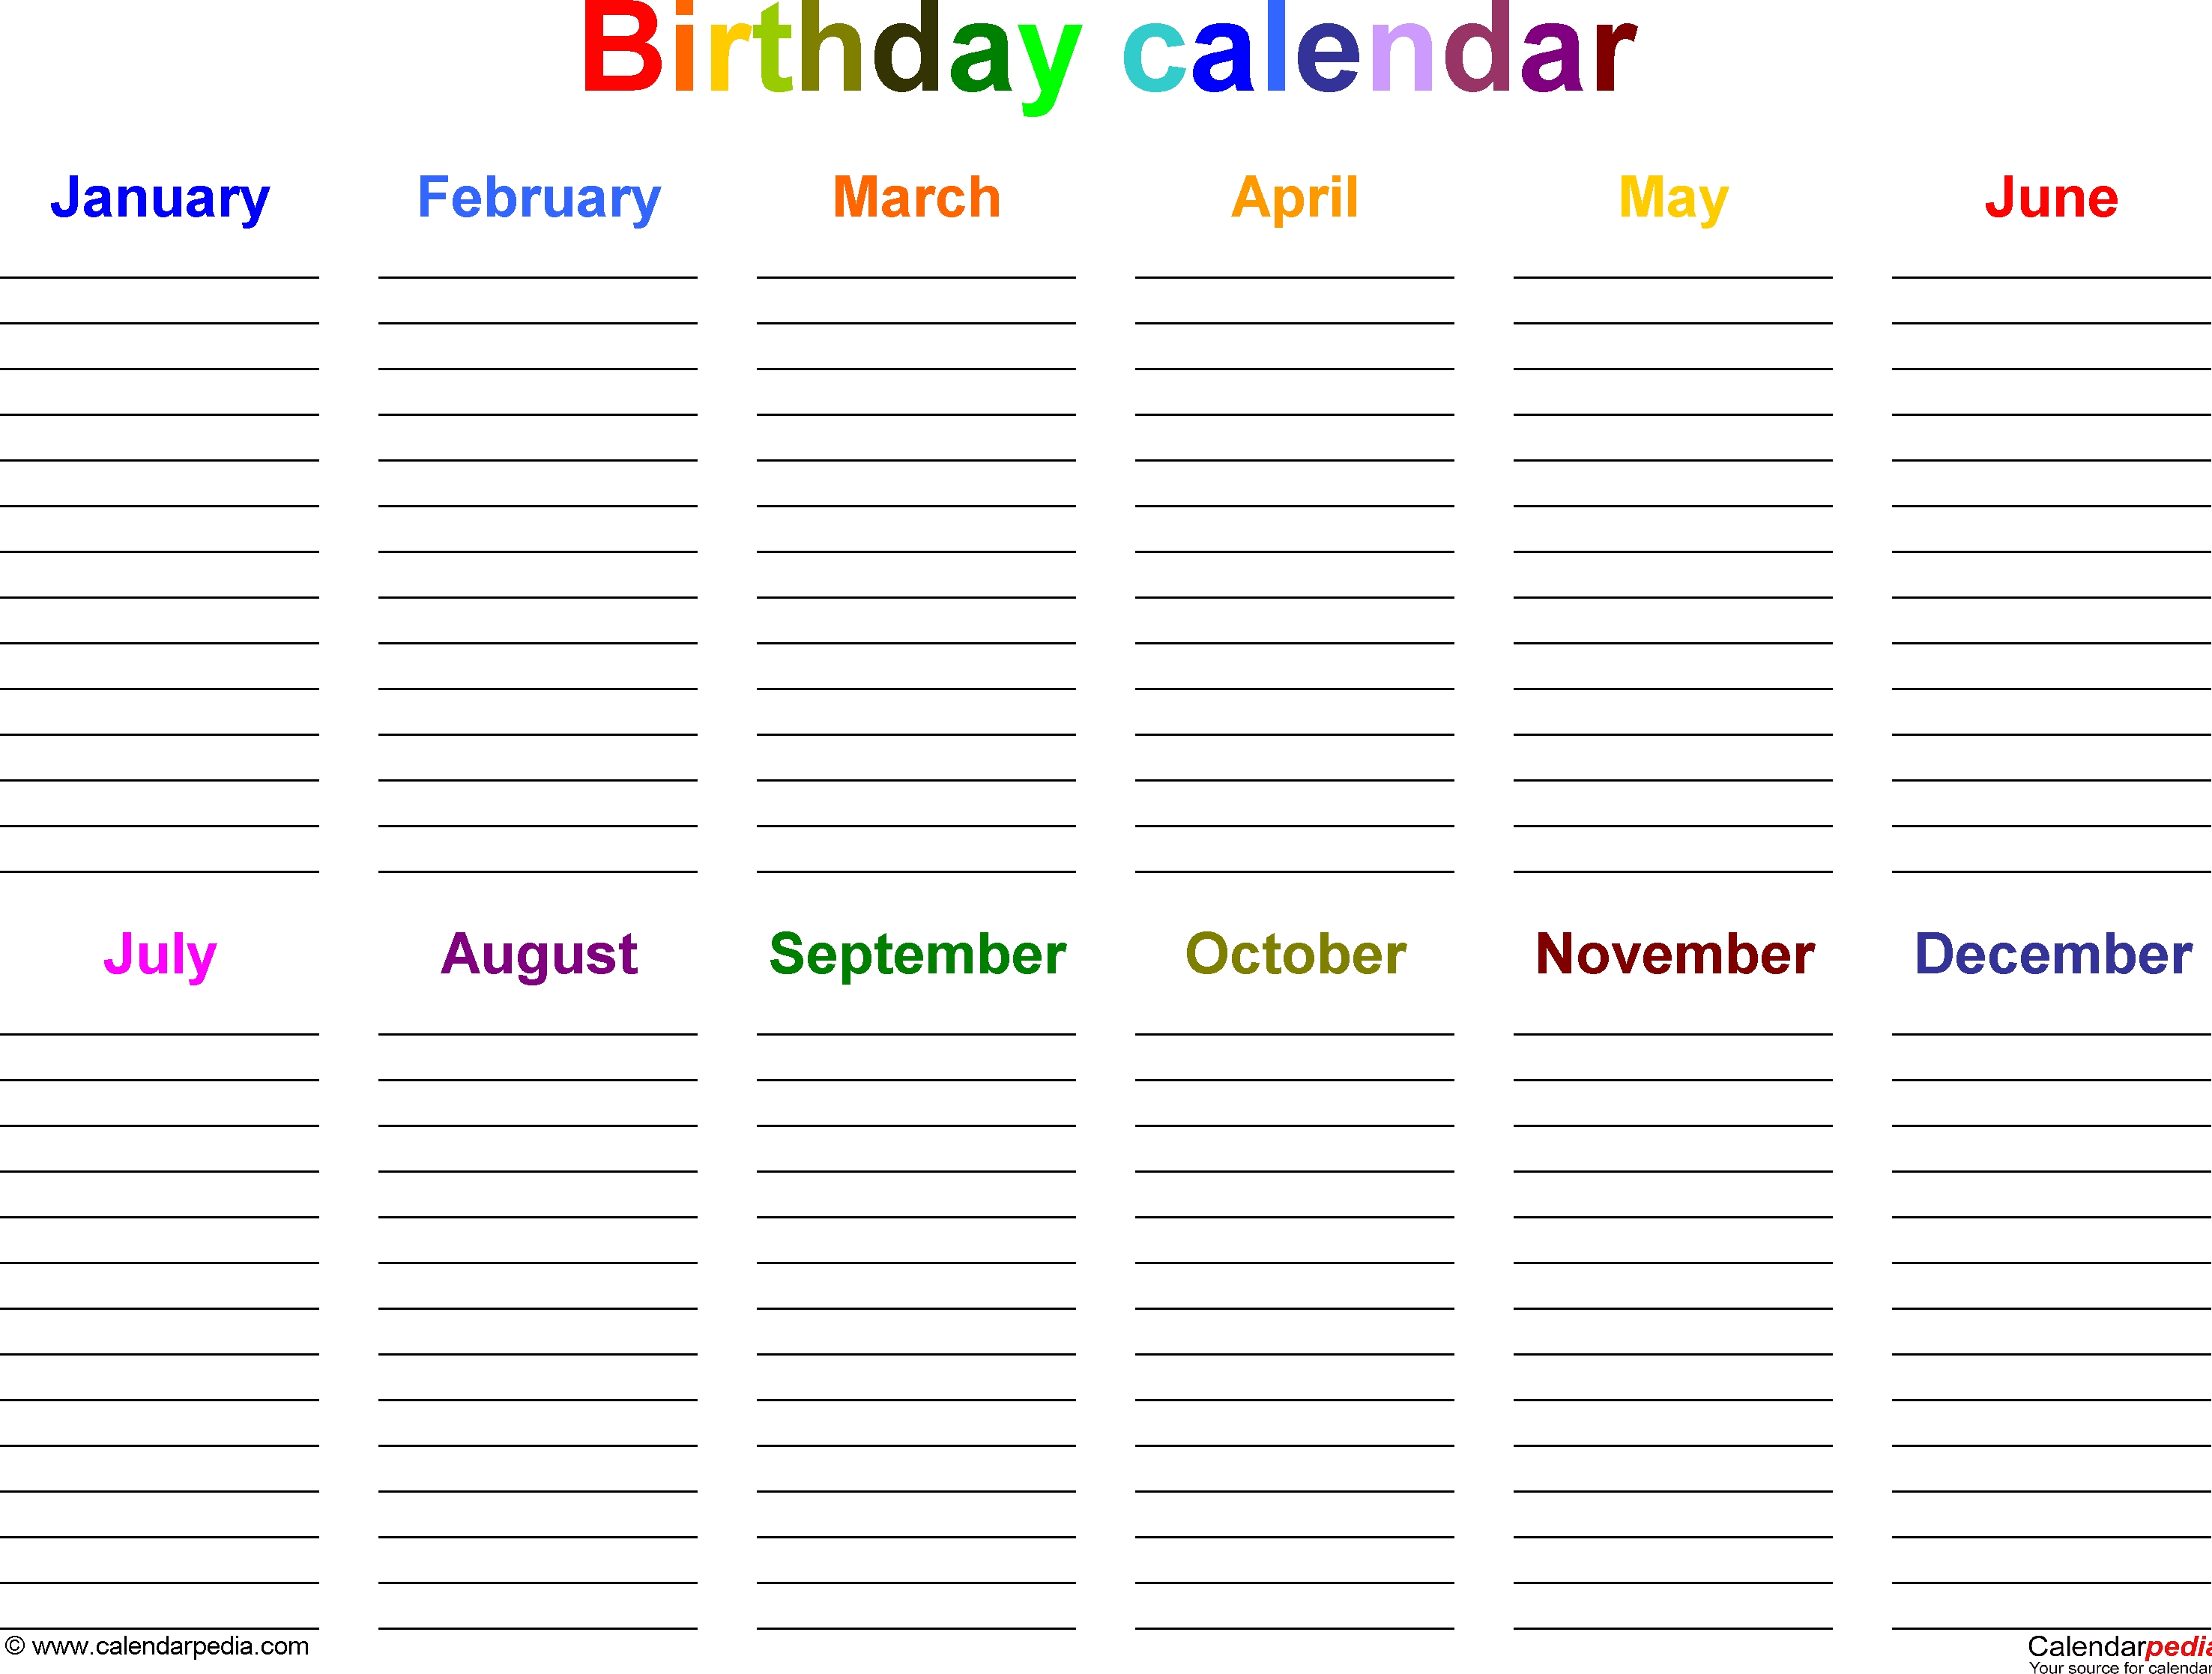 Birthday Calendars - 7 Free Printable Pdf Templates inside Holiday Themed Cupcake Templates For Calendar